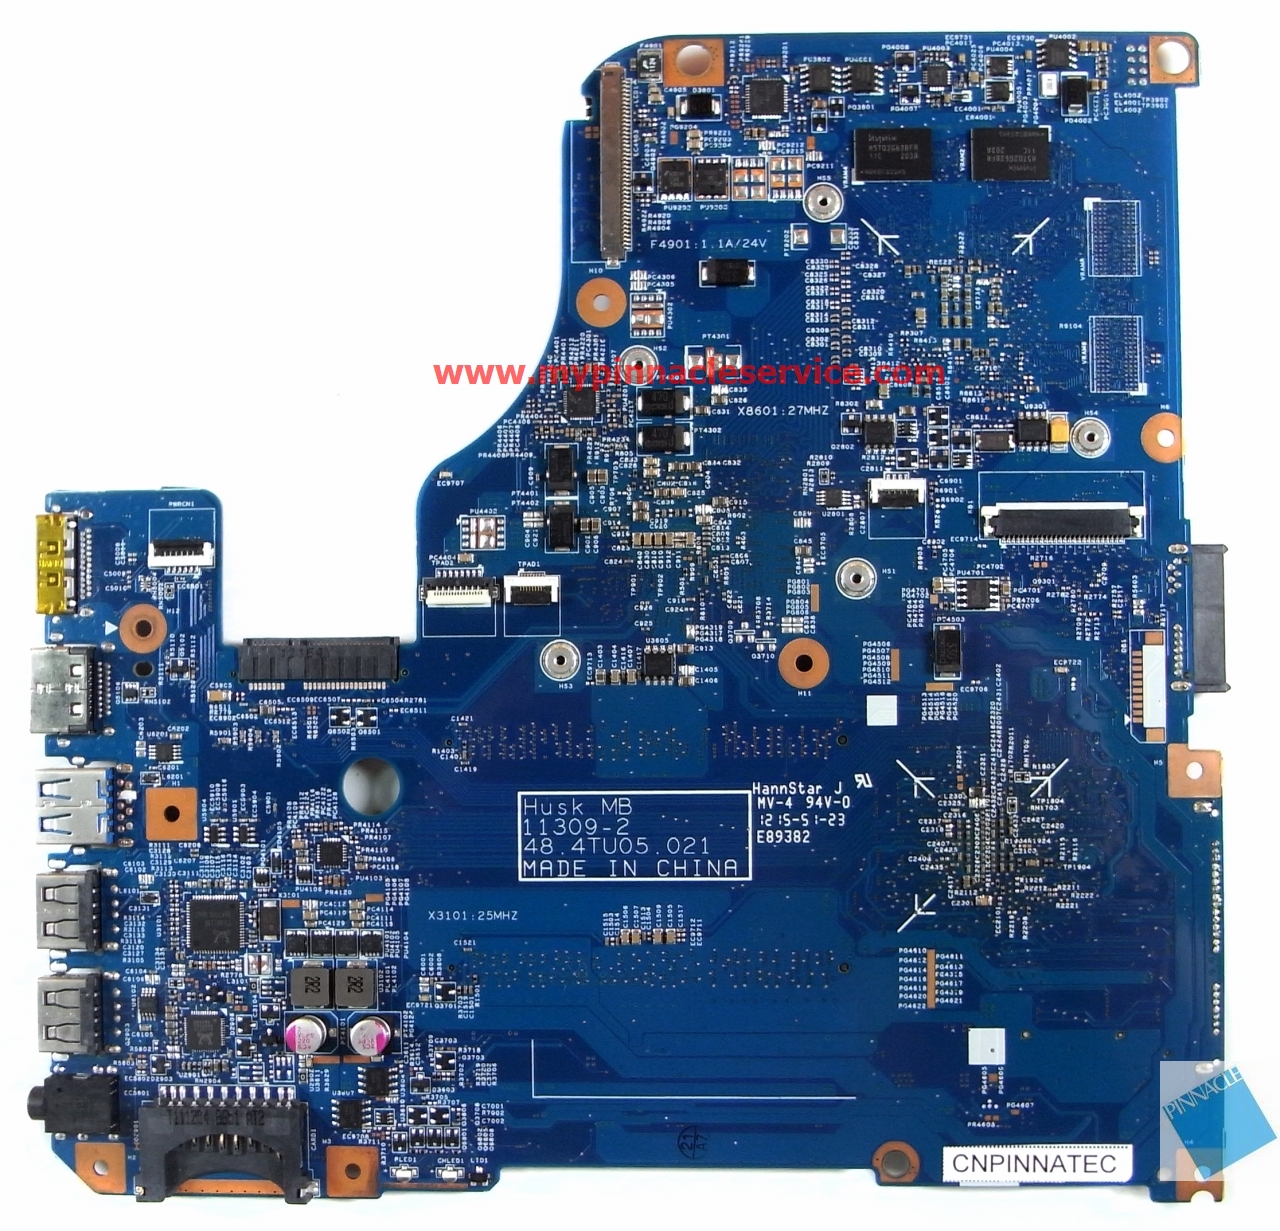 nbm1n11001-i3-2367m-motherboard-for-acer-aspire-v5-571g-v5-471g-48.4tu05.021-rimg0202.jpg